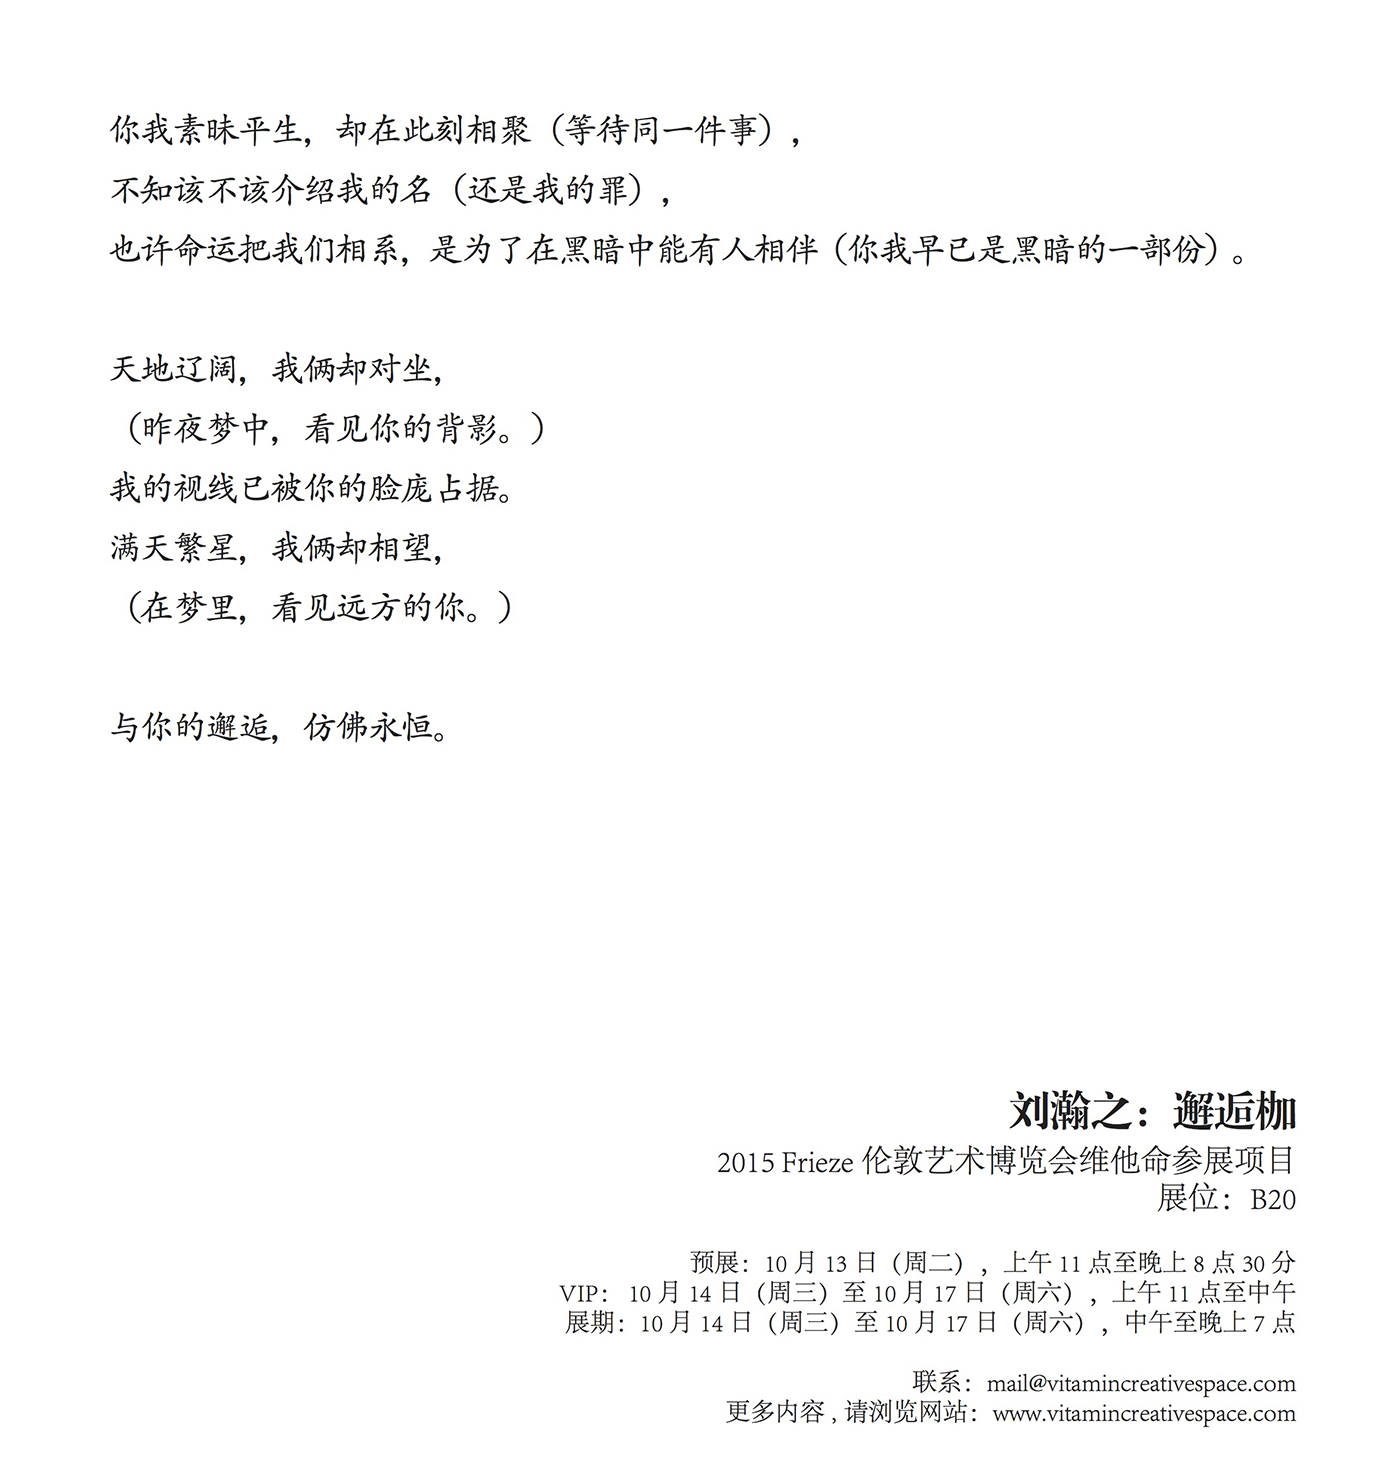 frieze2015 invitation draft 5 1008-3 (cn)小